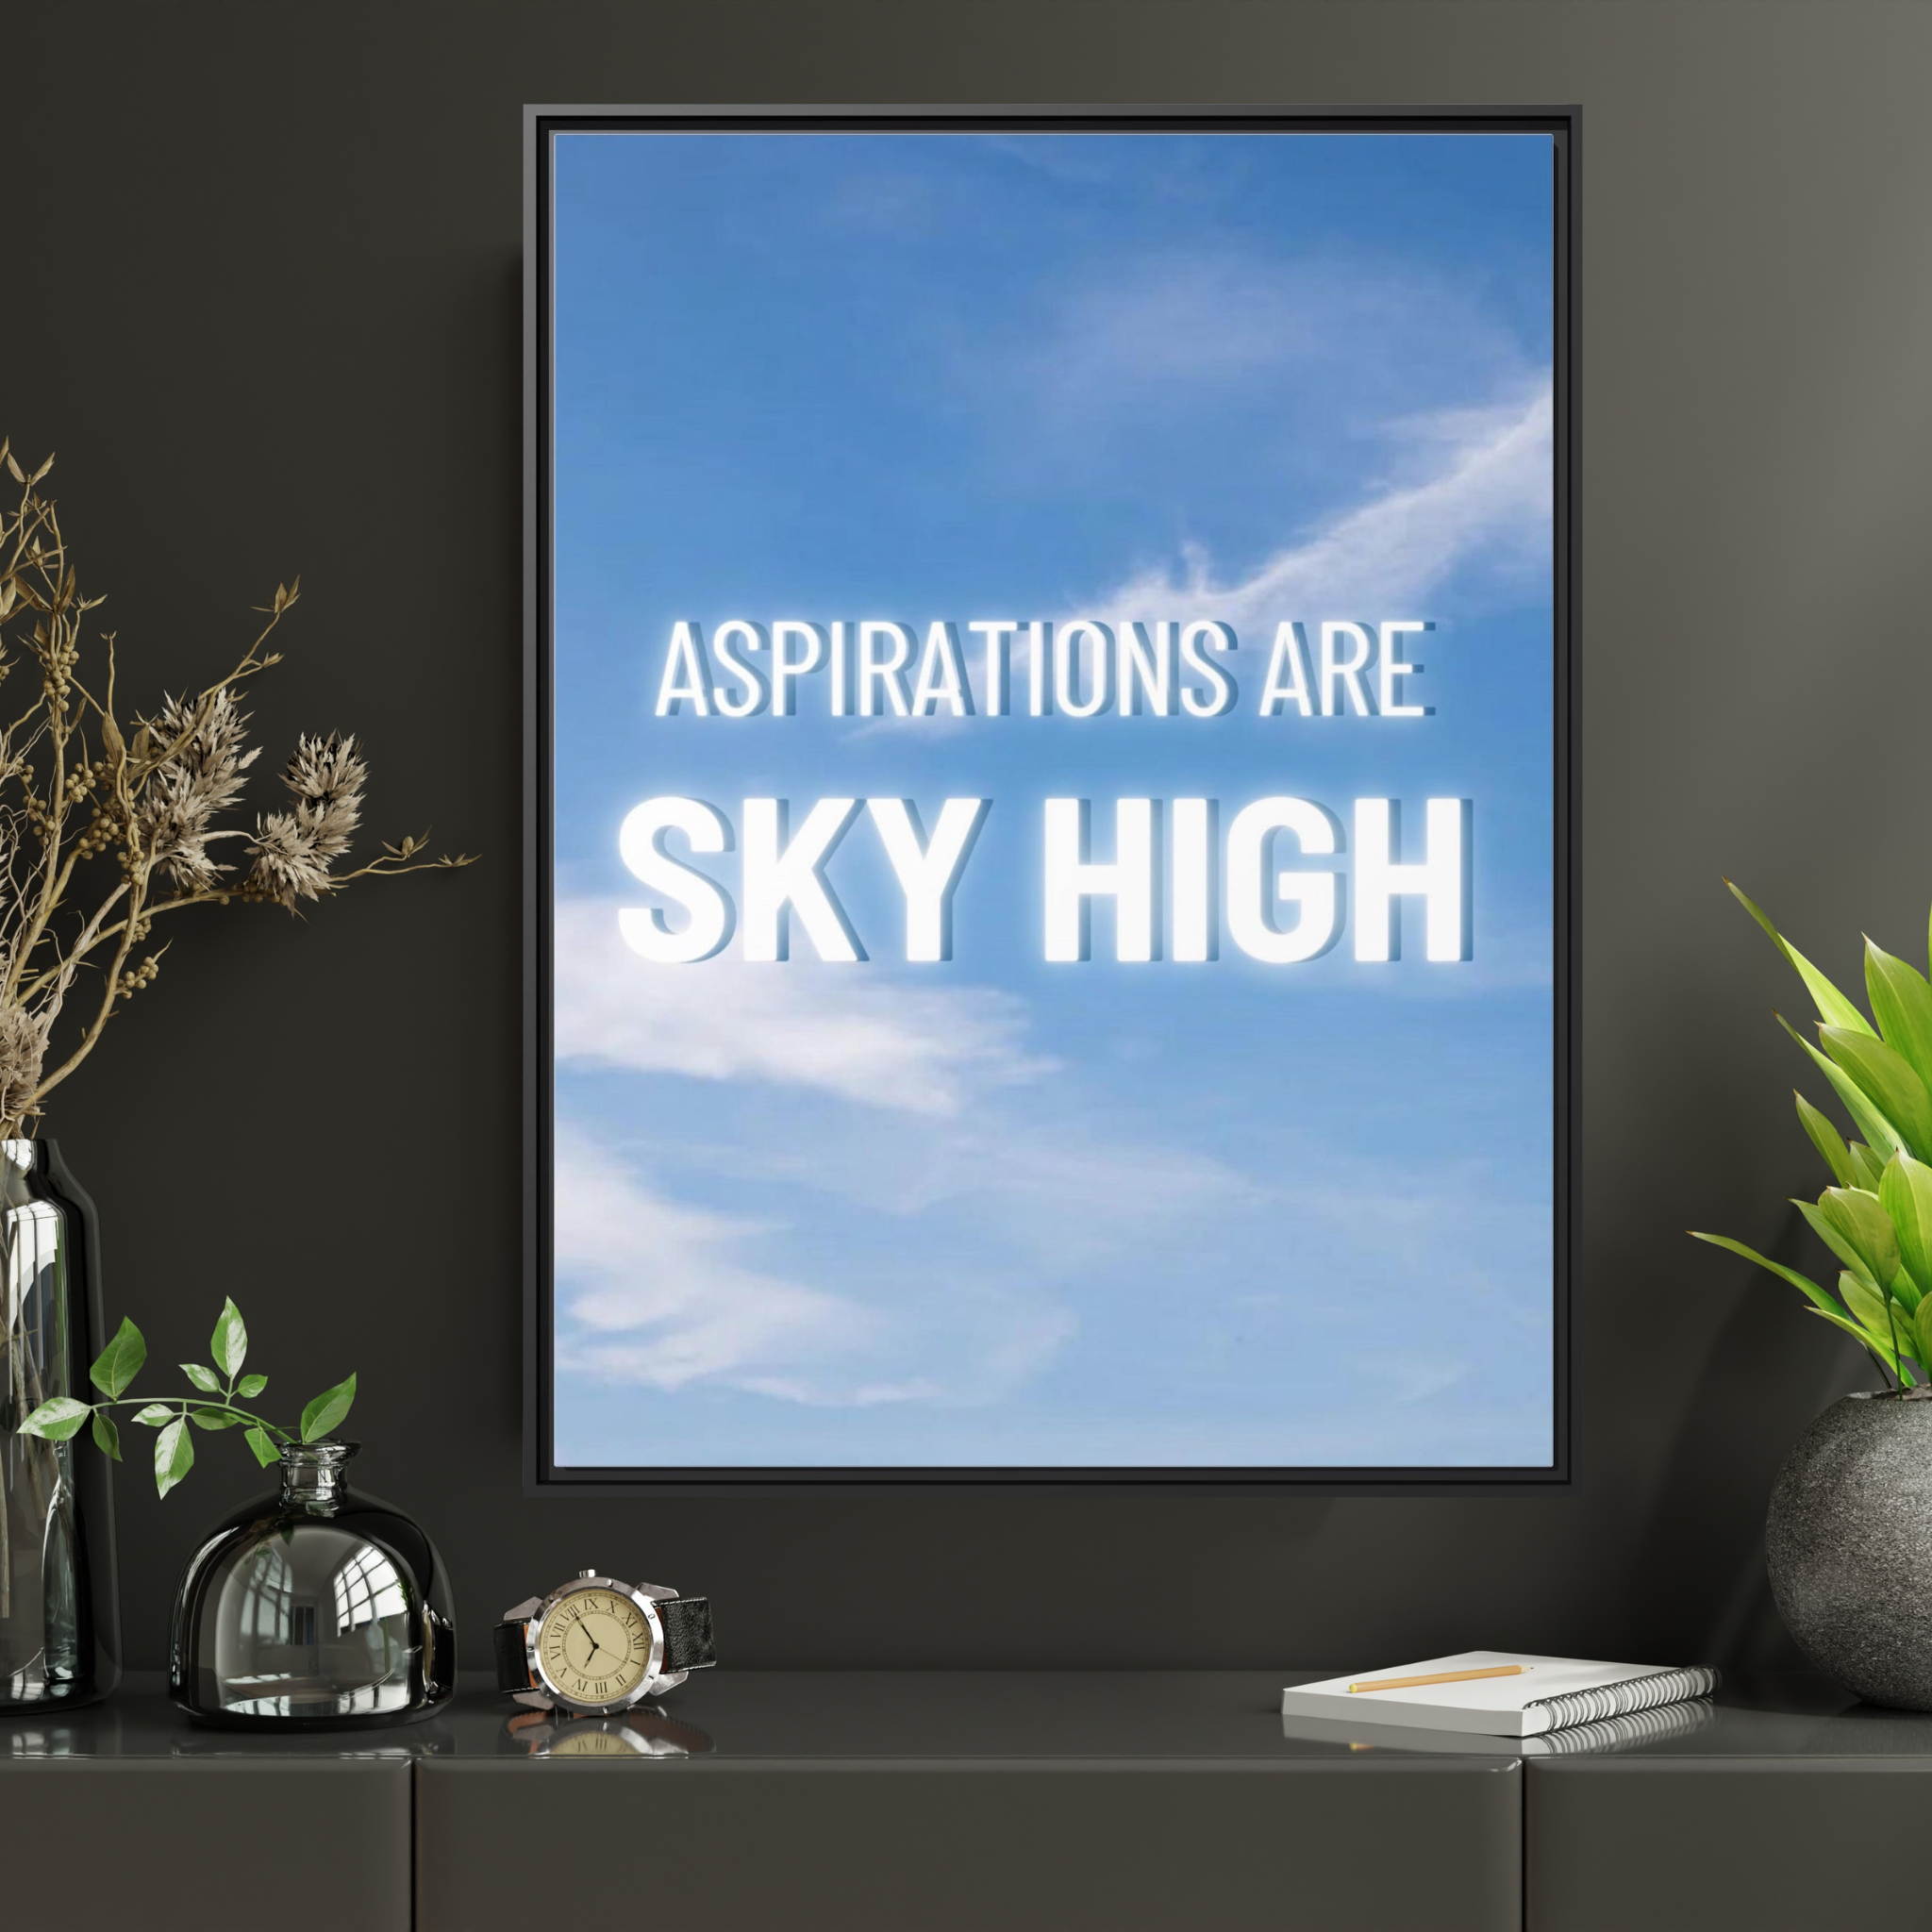 Aspirations Are Sky High Wall Art additional image 1